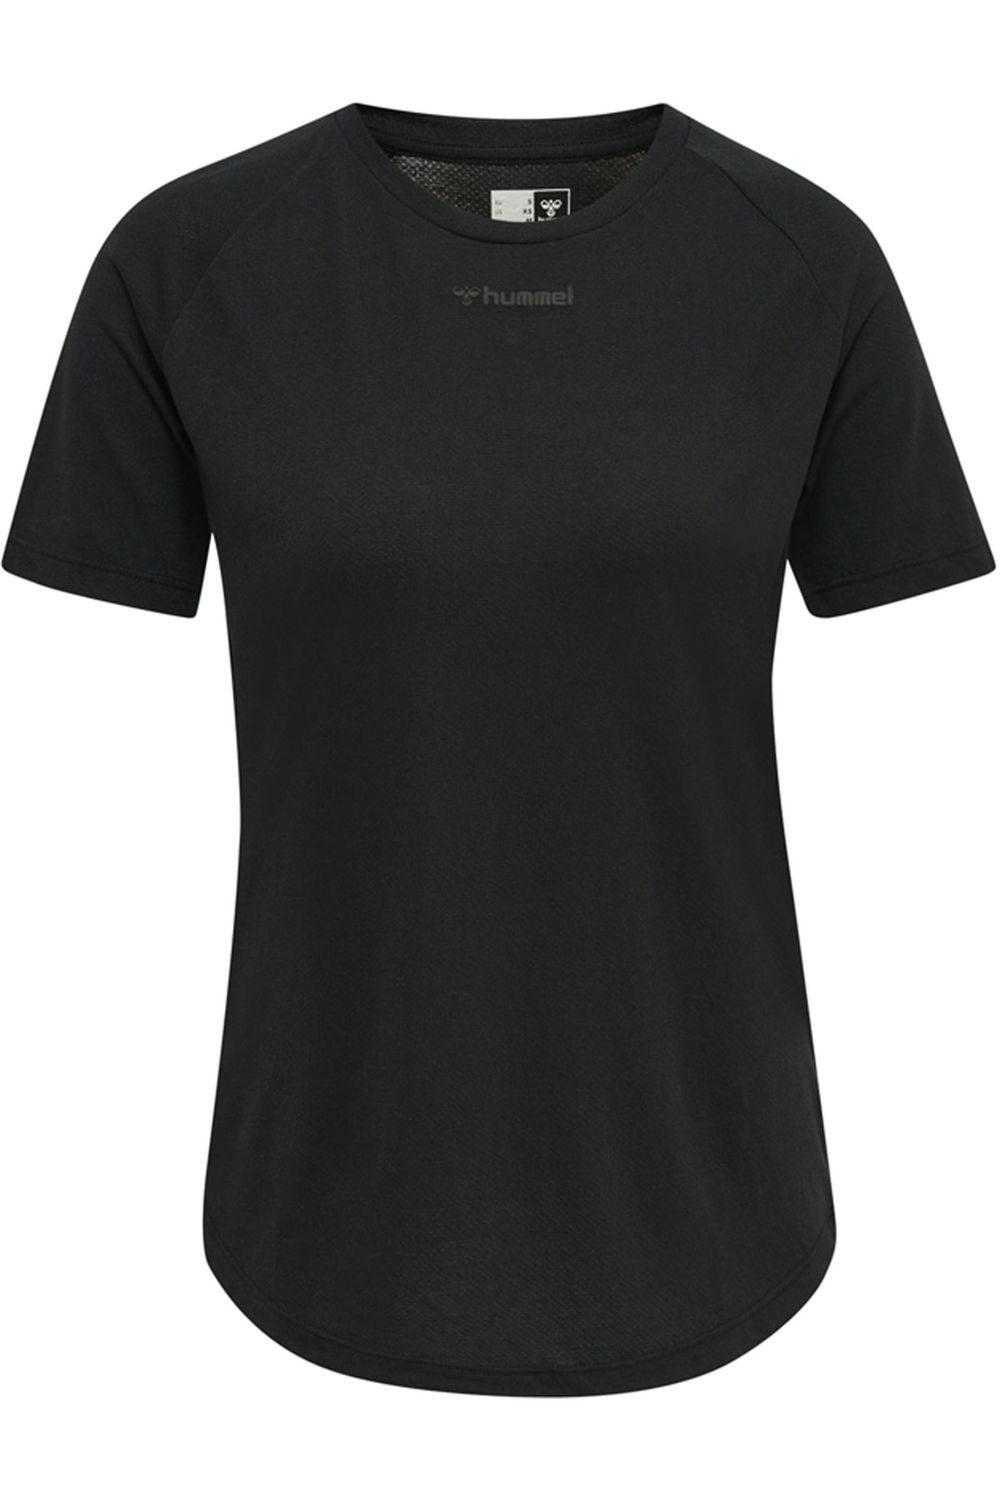 HUMMEL - - Braun T-Shirt Trendyol - Fit Regular